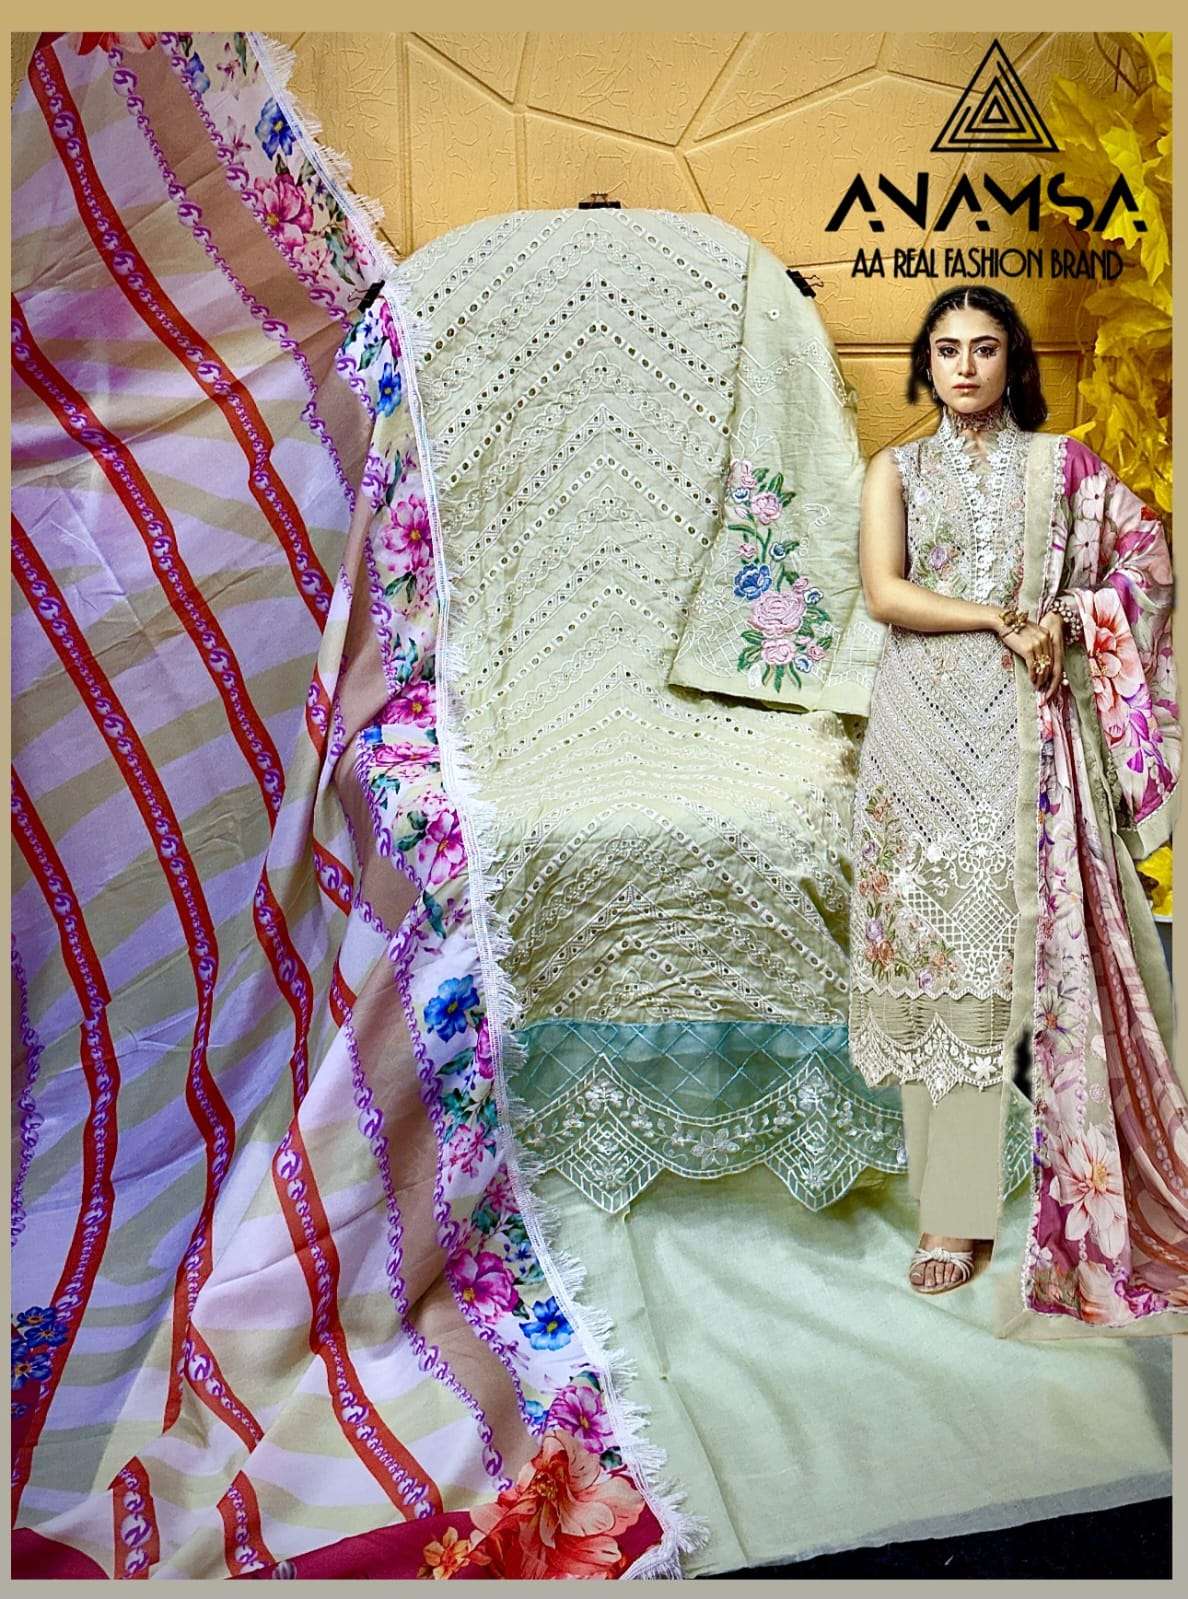 anamsa d no 463 a b c d hits beautiful colours jam cotton regal look salwar suit catalog